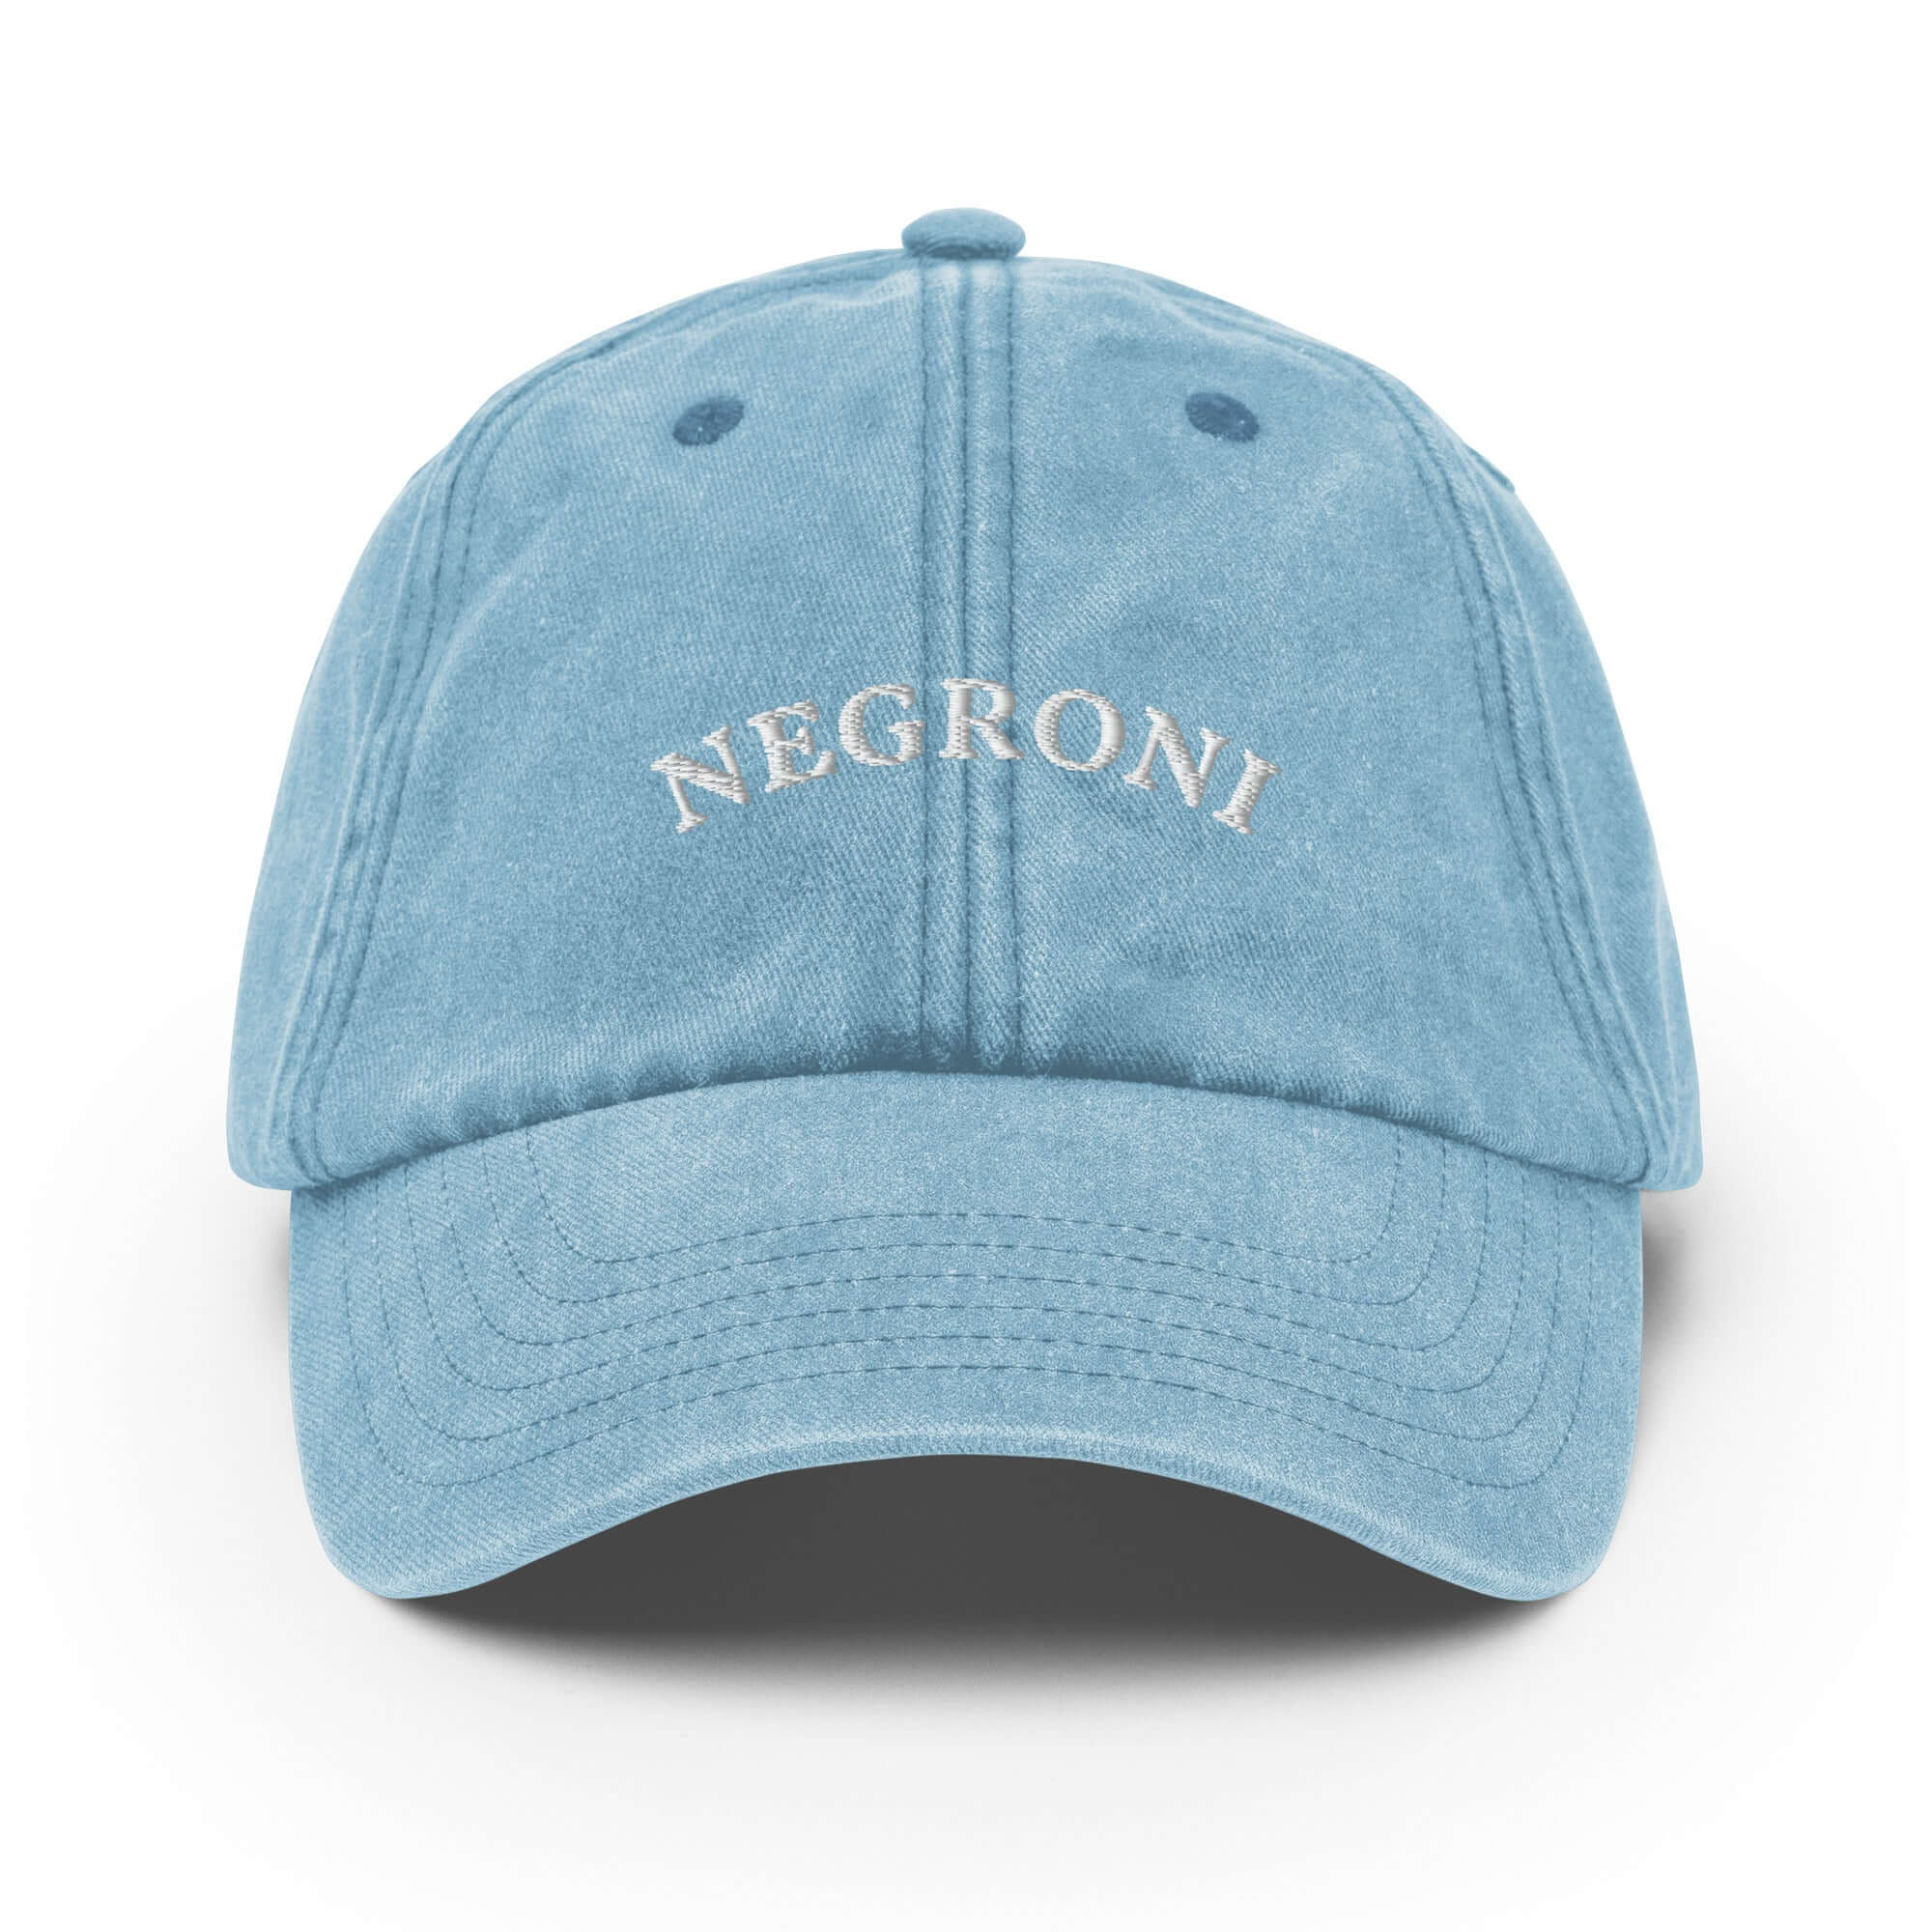 Negroni Vintage Cap - The Refined Spirit